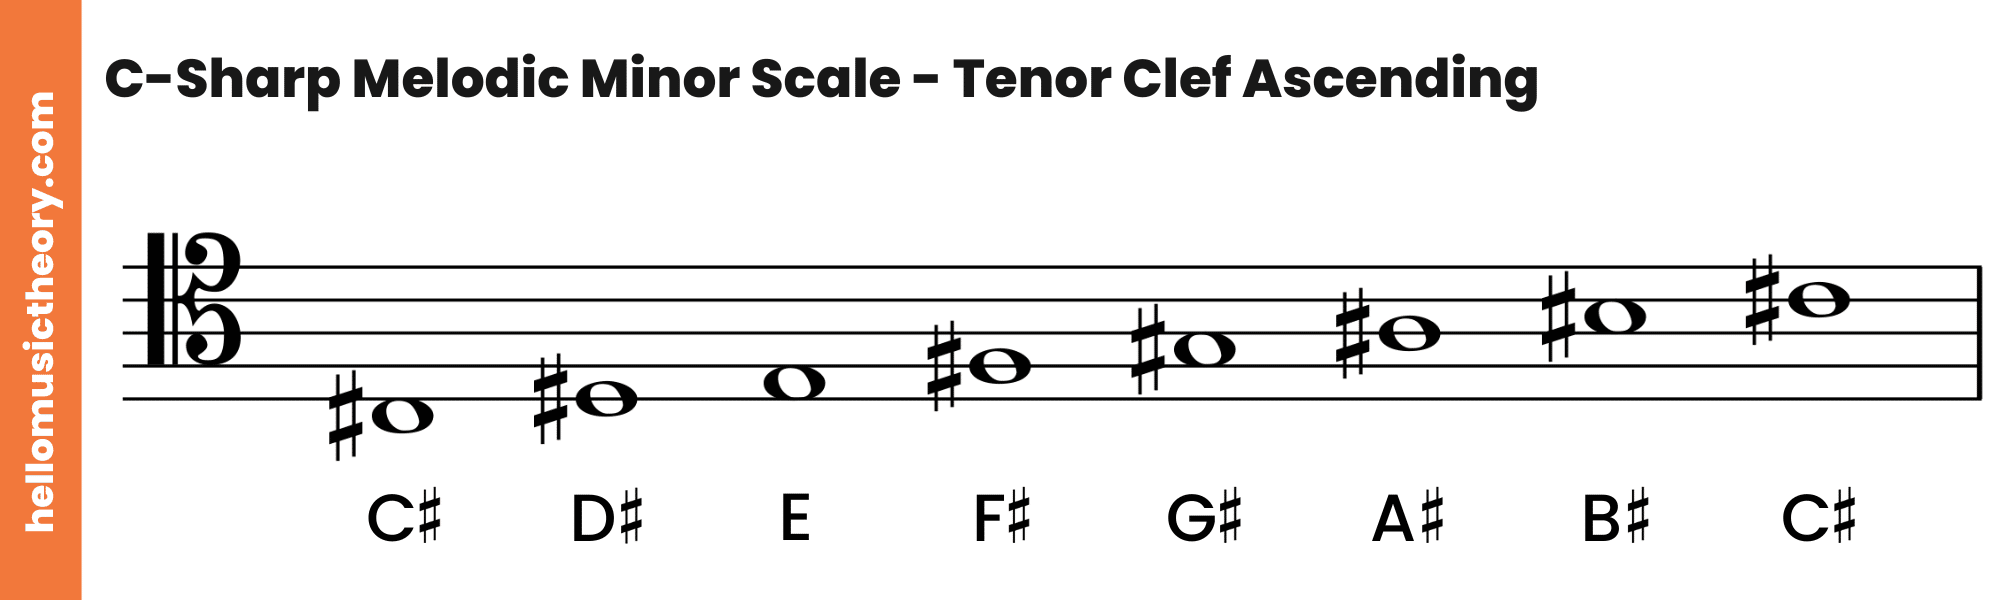 C-Sharp Melodic Minor Scale Tenor Clef Ascending